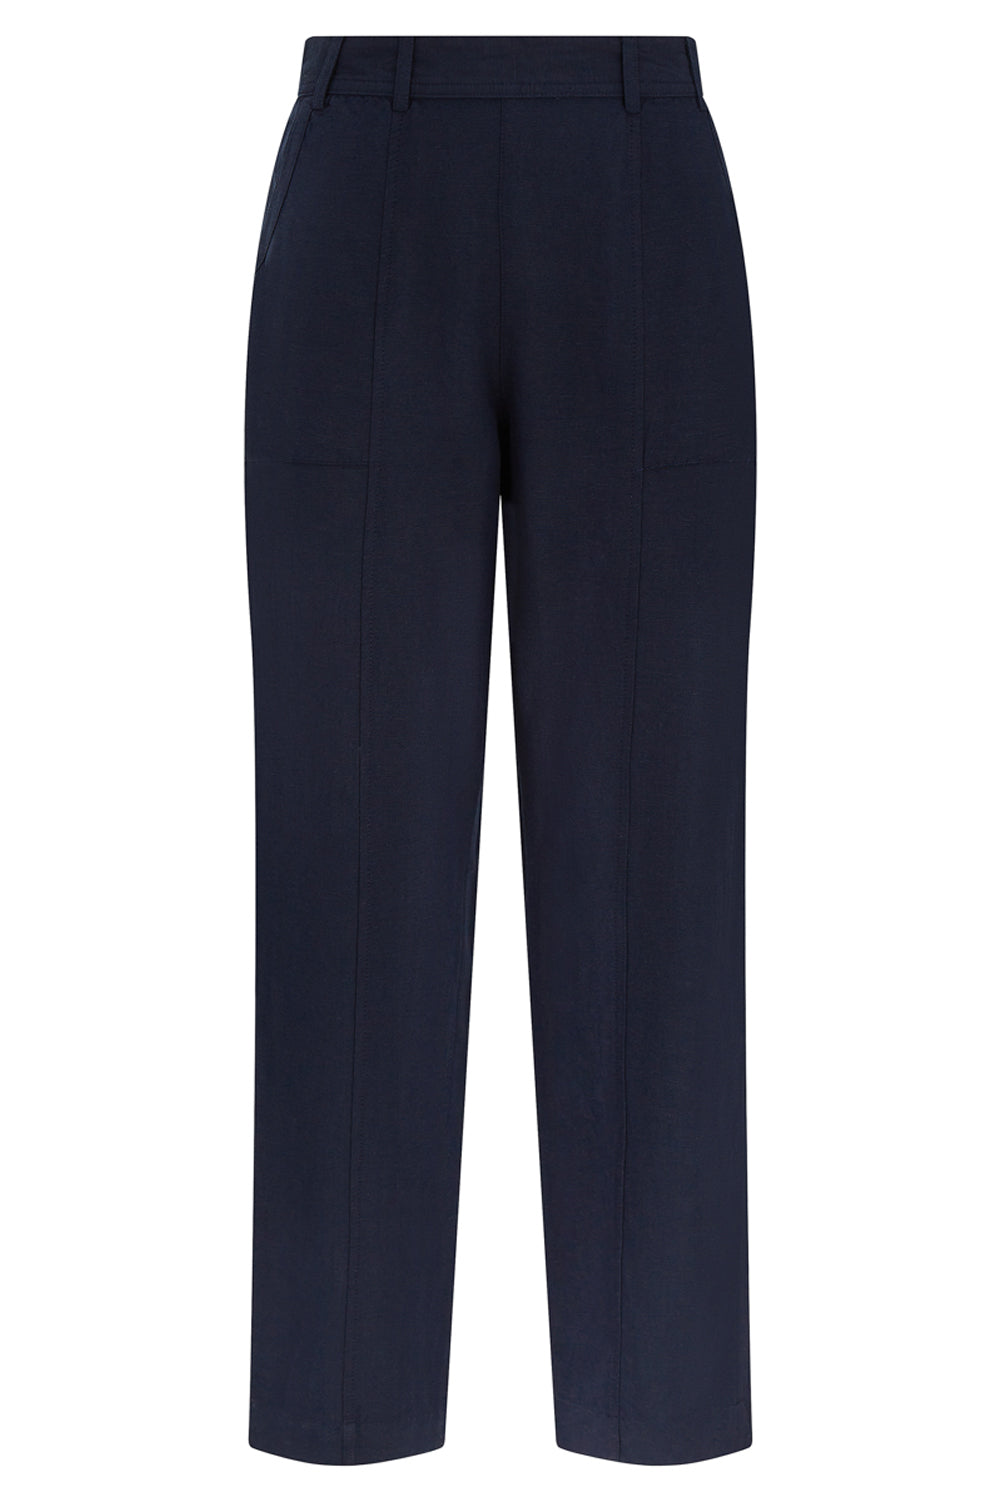 Tigiwear Linen Blend Navy Trousers 2 Shaws Department Stores